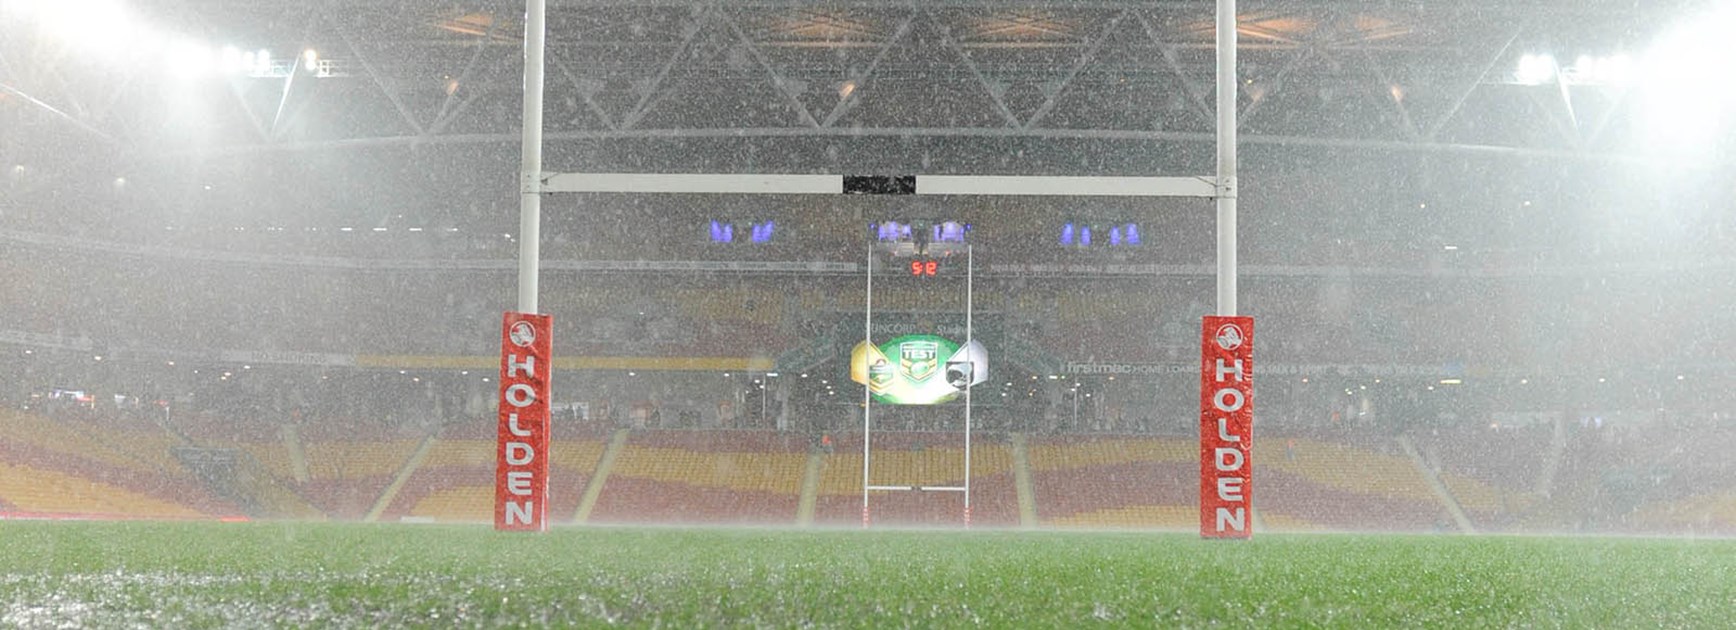 Bad weather at Suncorp Stadium.